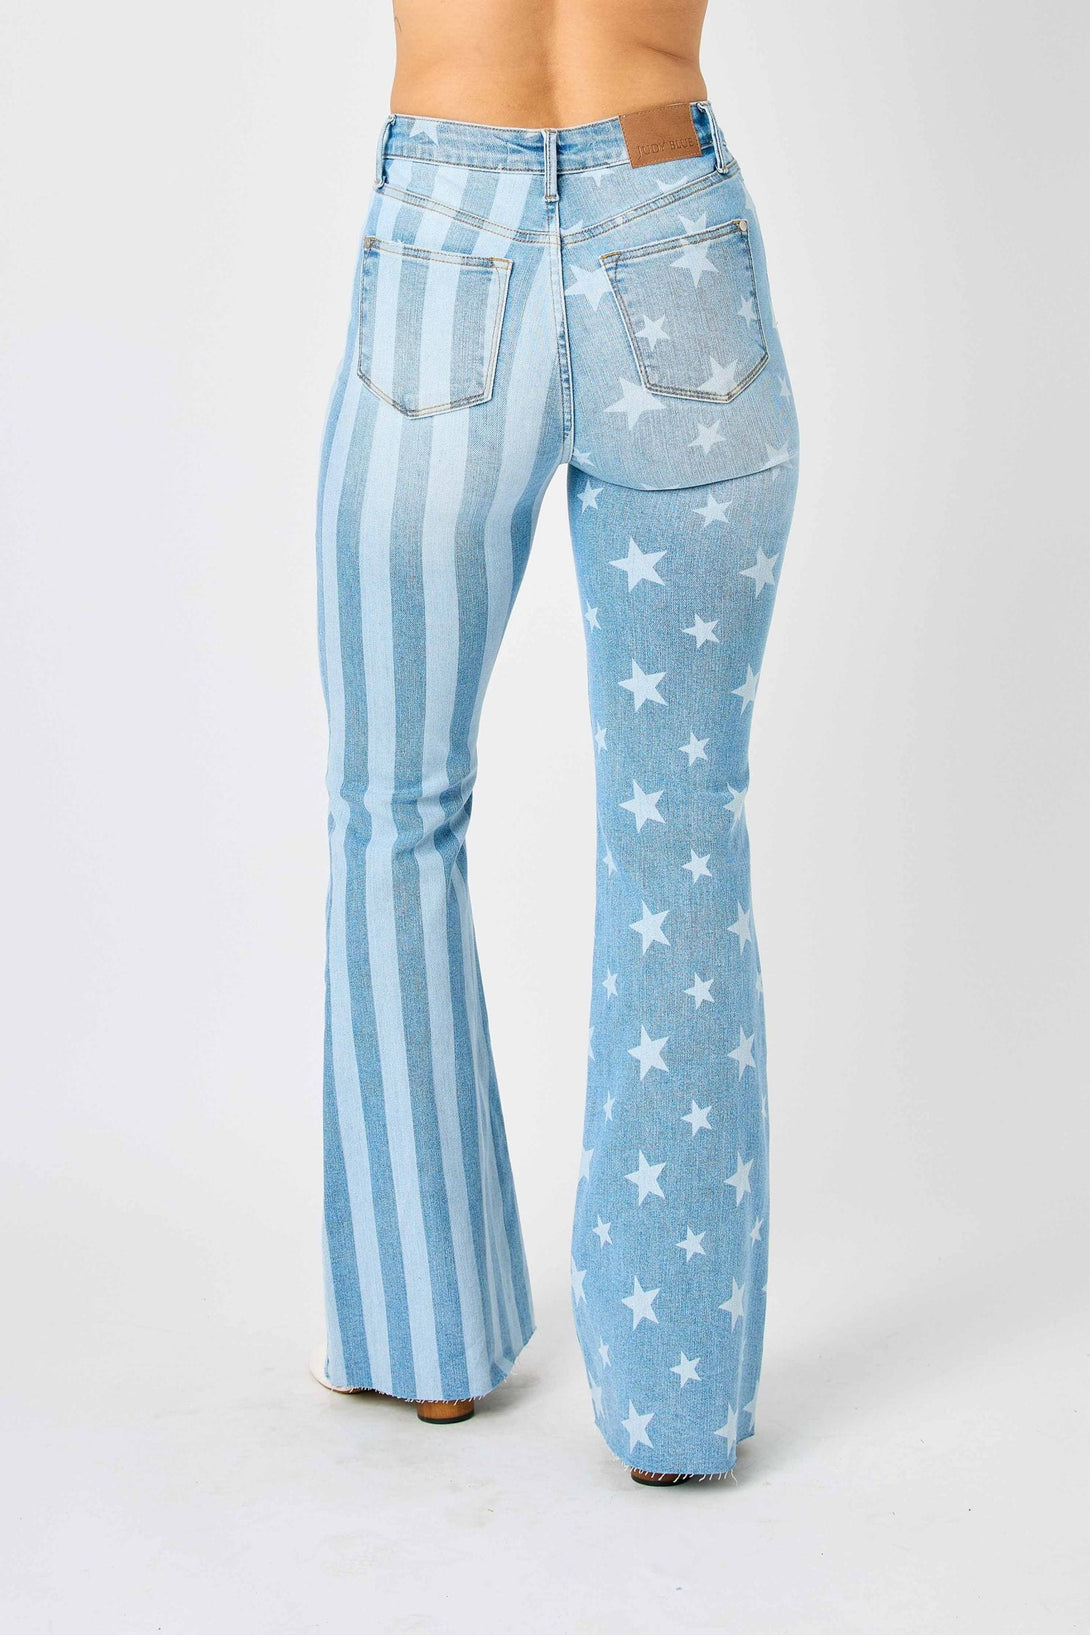 Judy Blue High Waist Bleached Stars & Stripes Flare Jeans